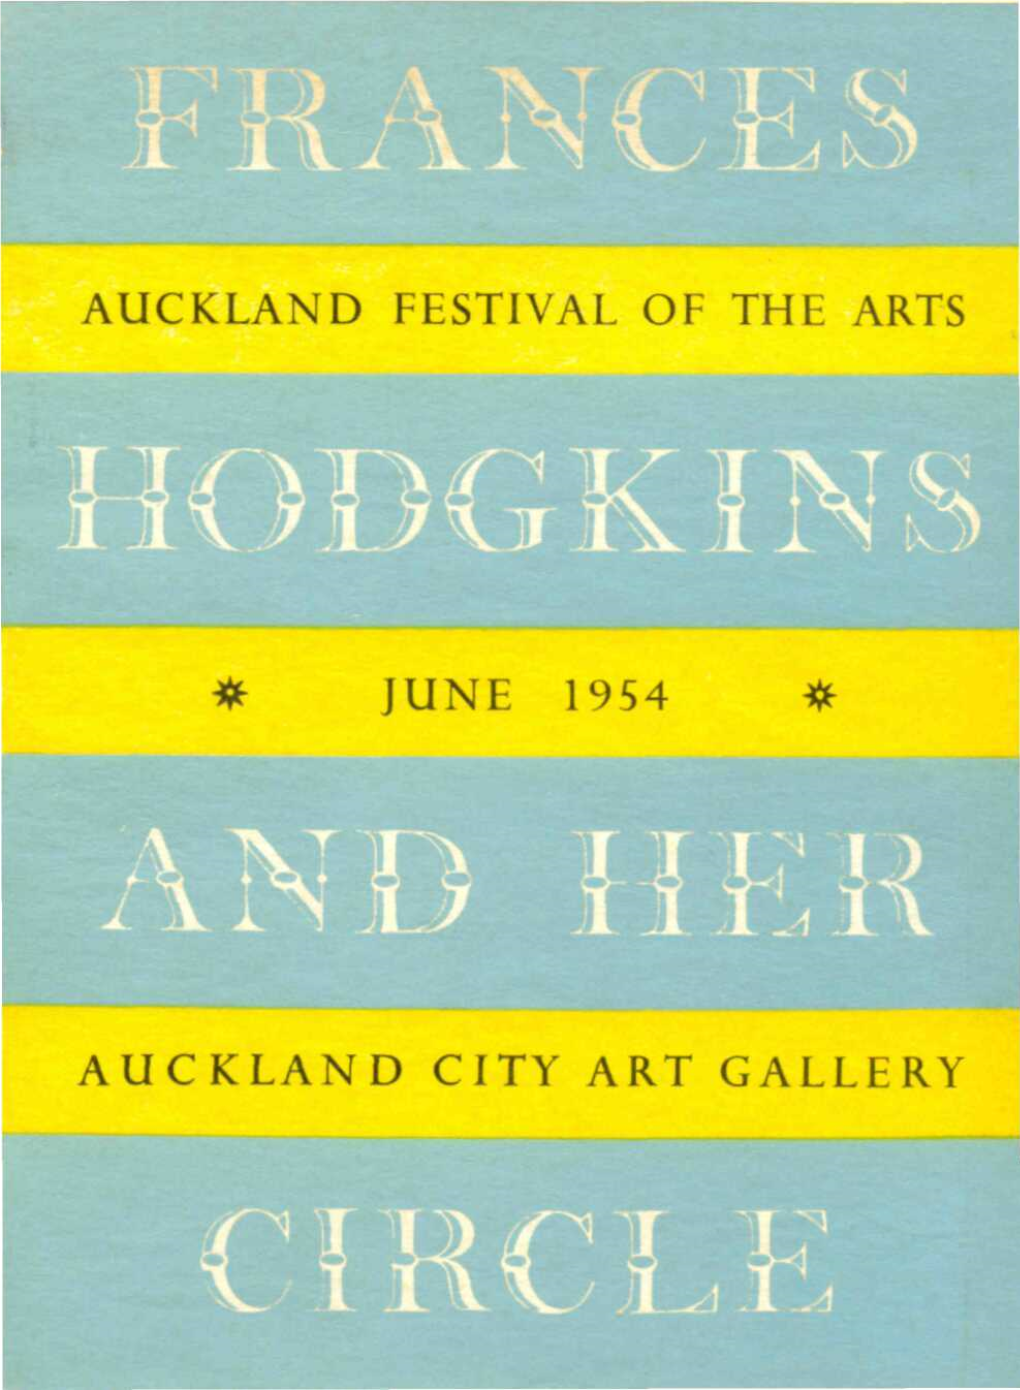 Auckland Festival of the Arts June 1954 Auckland City Art